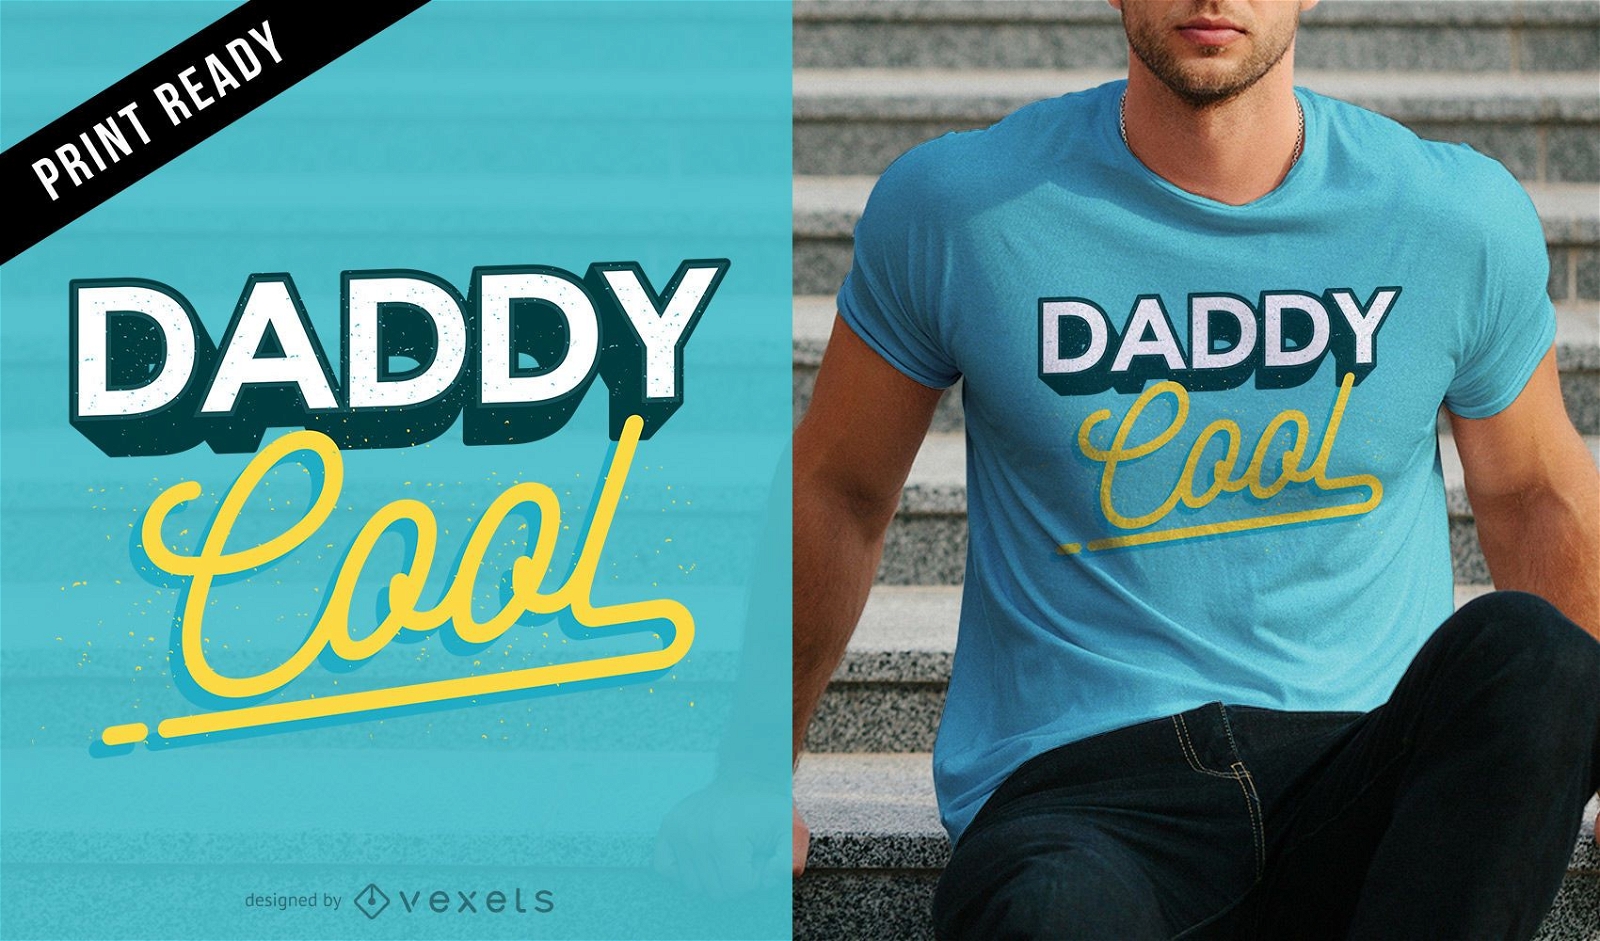 Daddy cool t-shirt design